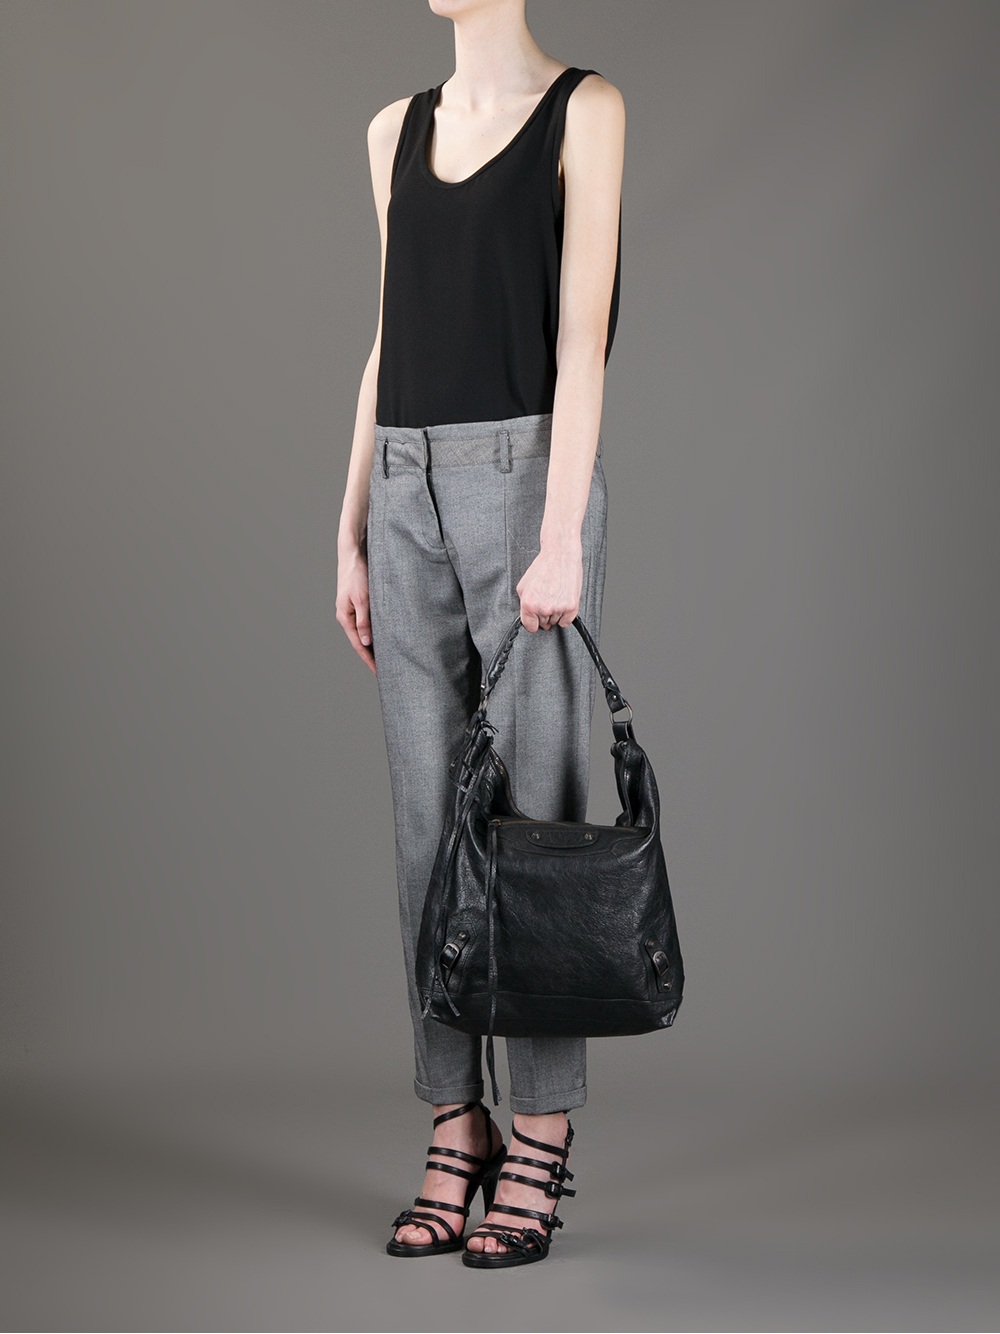 Balenciaga Classic Day Tote Bag in Black - Lyst